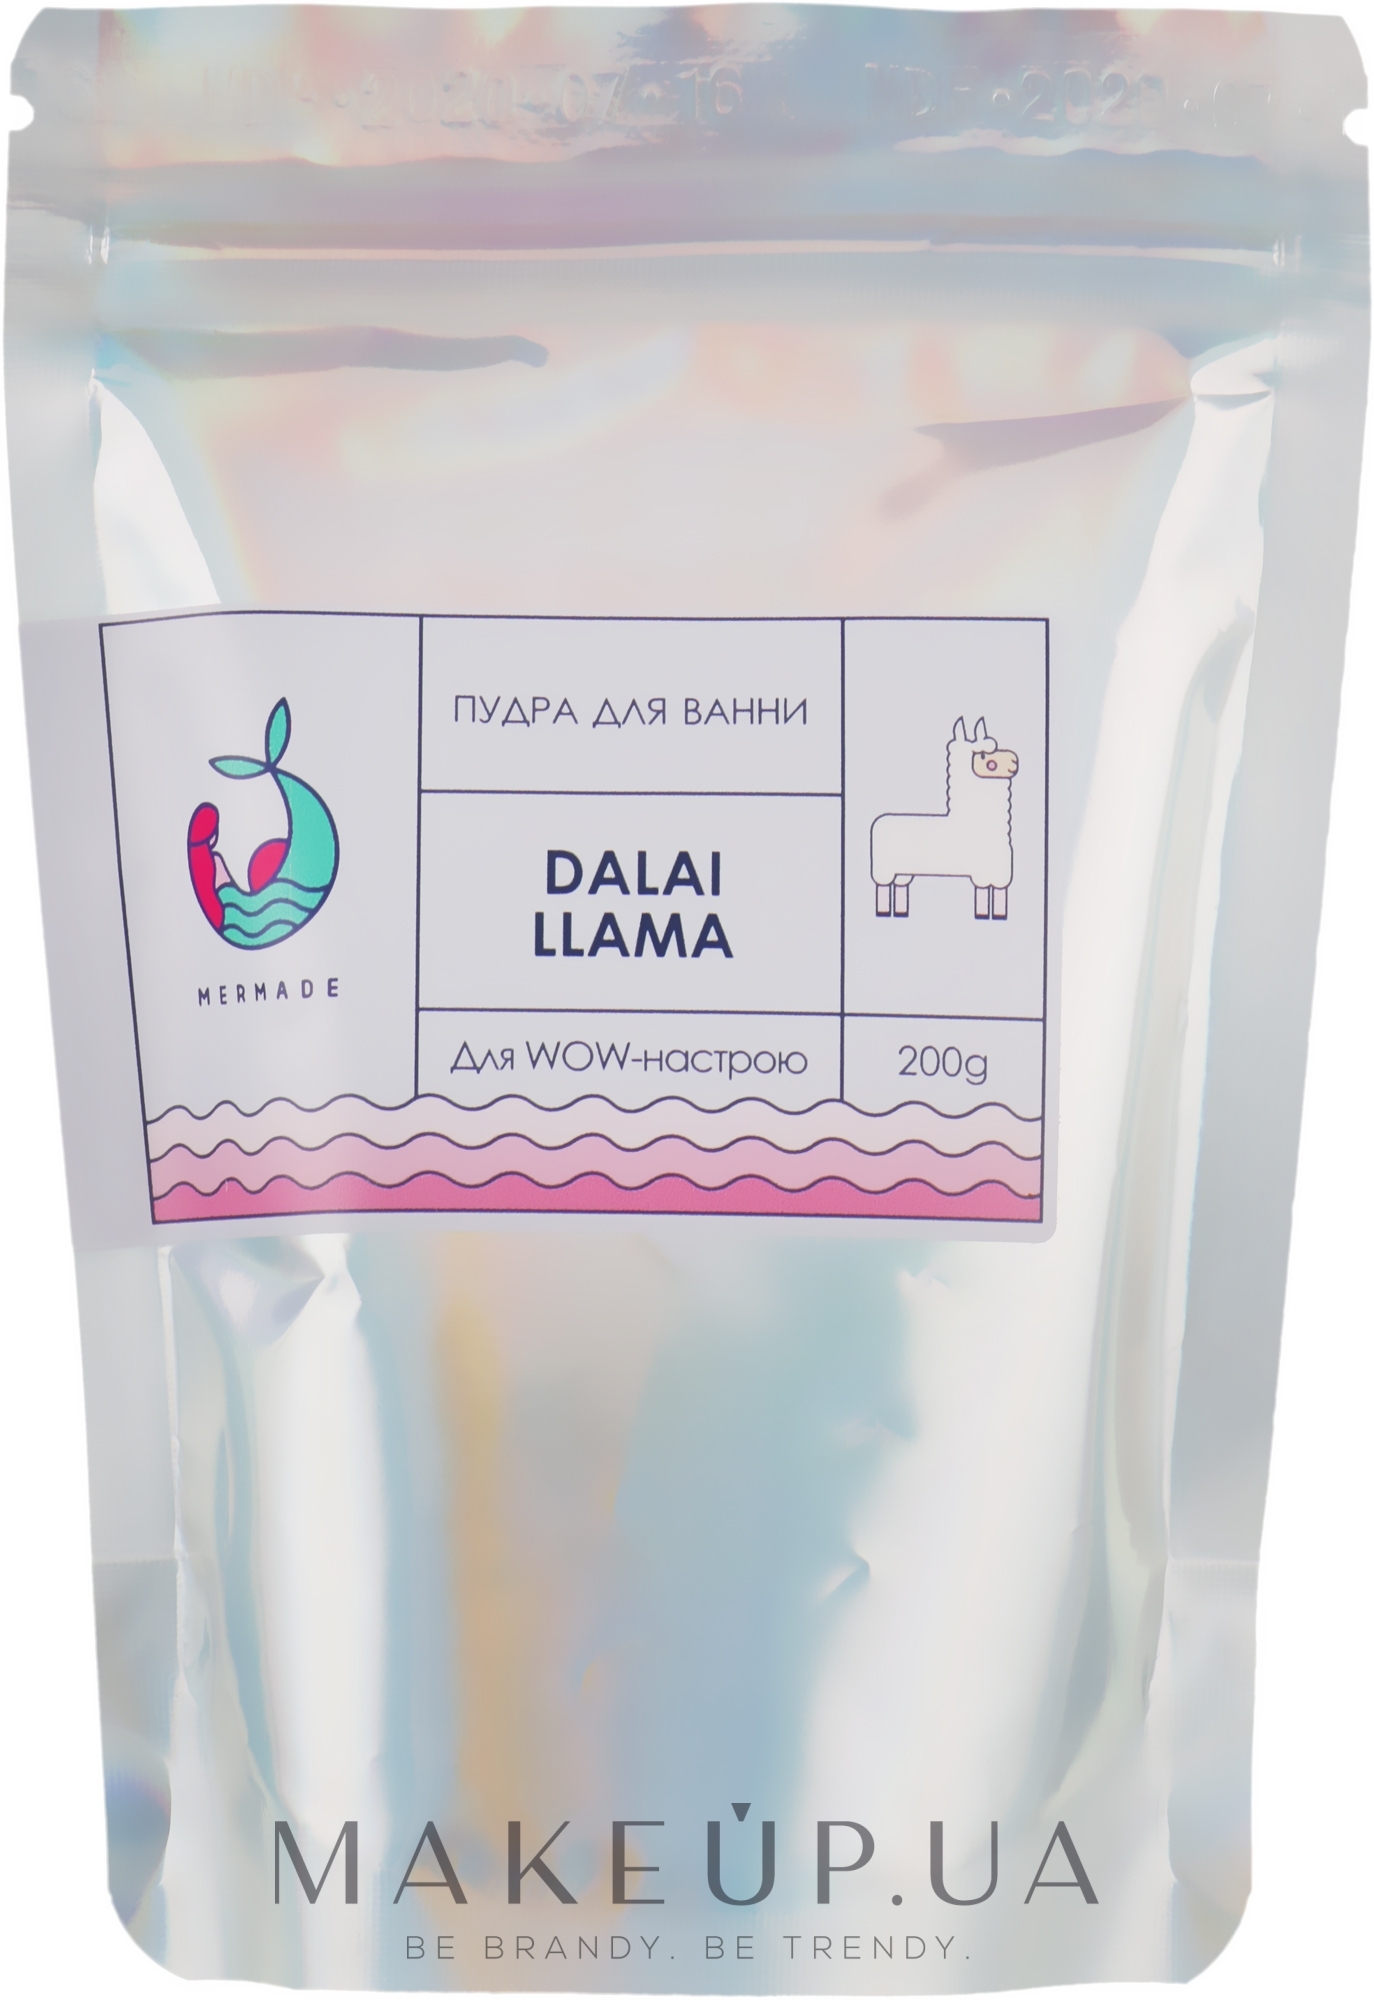 Пудра для ванны - Mermade Dalai Llama  — фото 200g